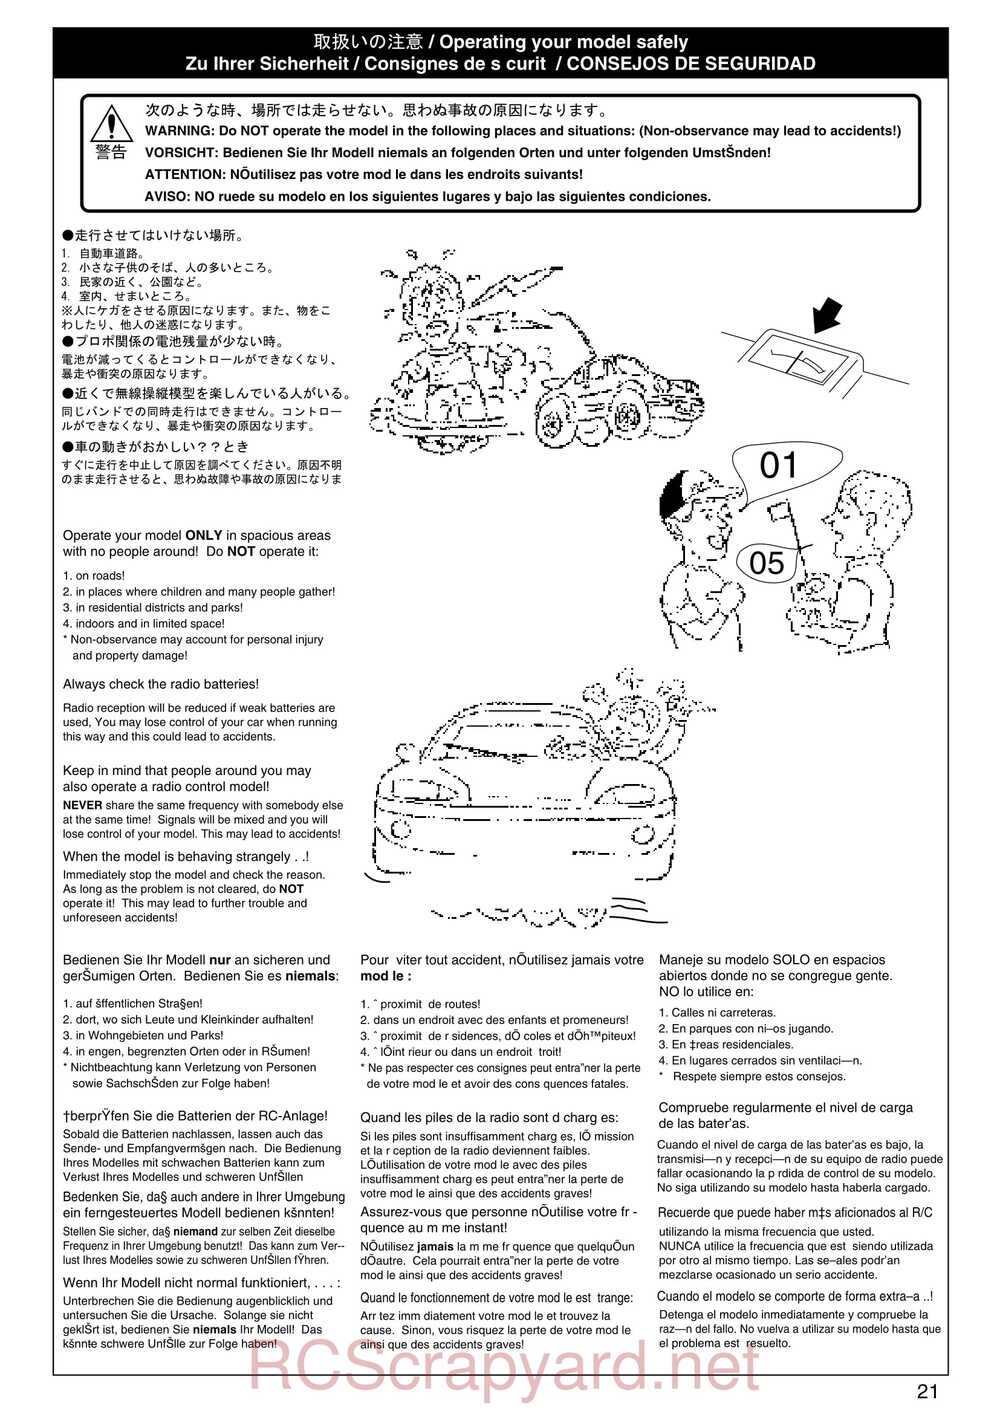 Kyosho - 31092 - GP Ultima RB Racing Sports - Manual - Page 21